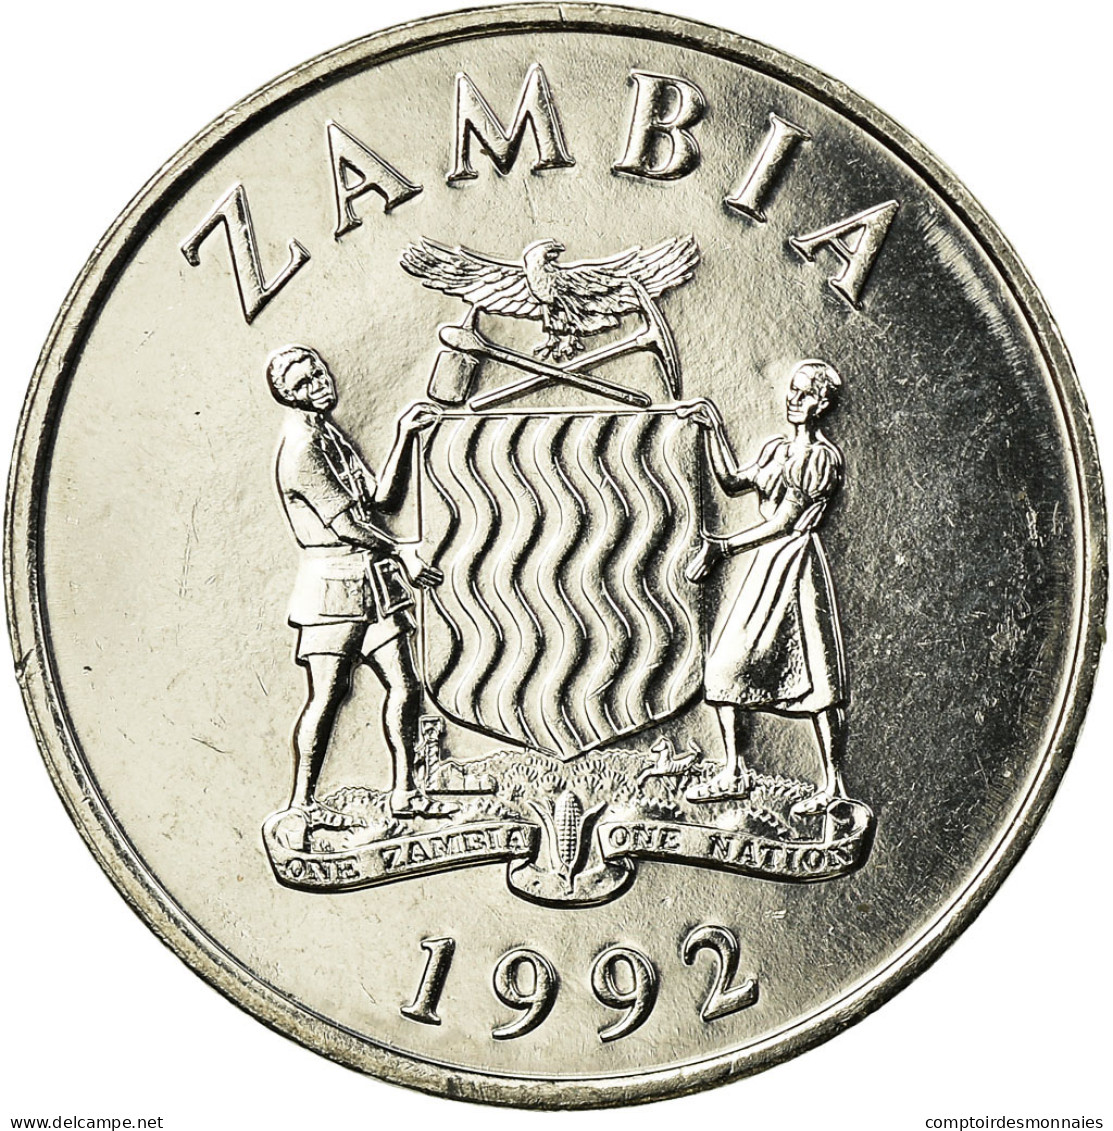 Monnaie, Zambie, 25 Ngwee, 1992, British Royal Mint, TTB, Nickel Plated Steel - Zambie